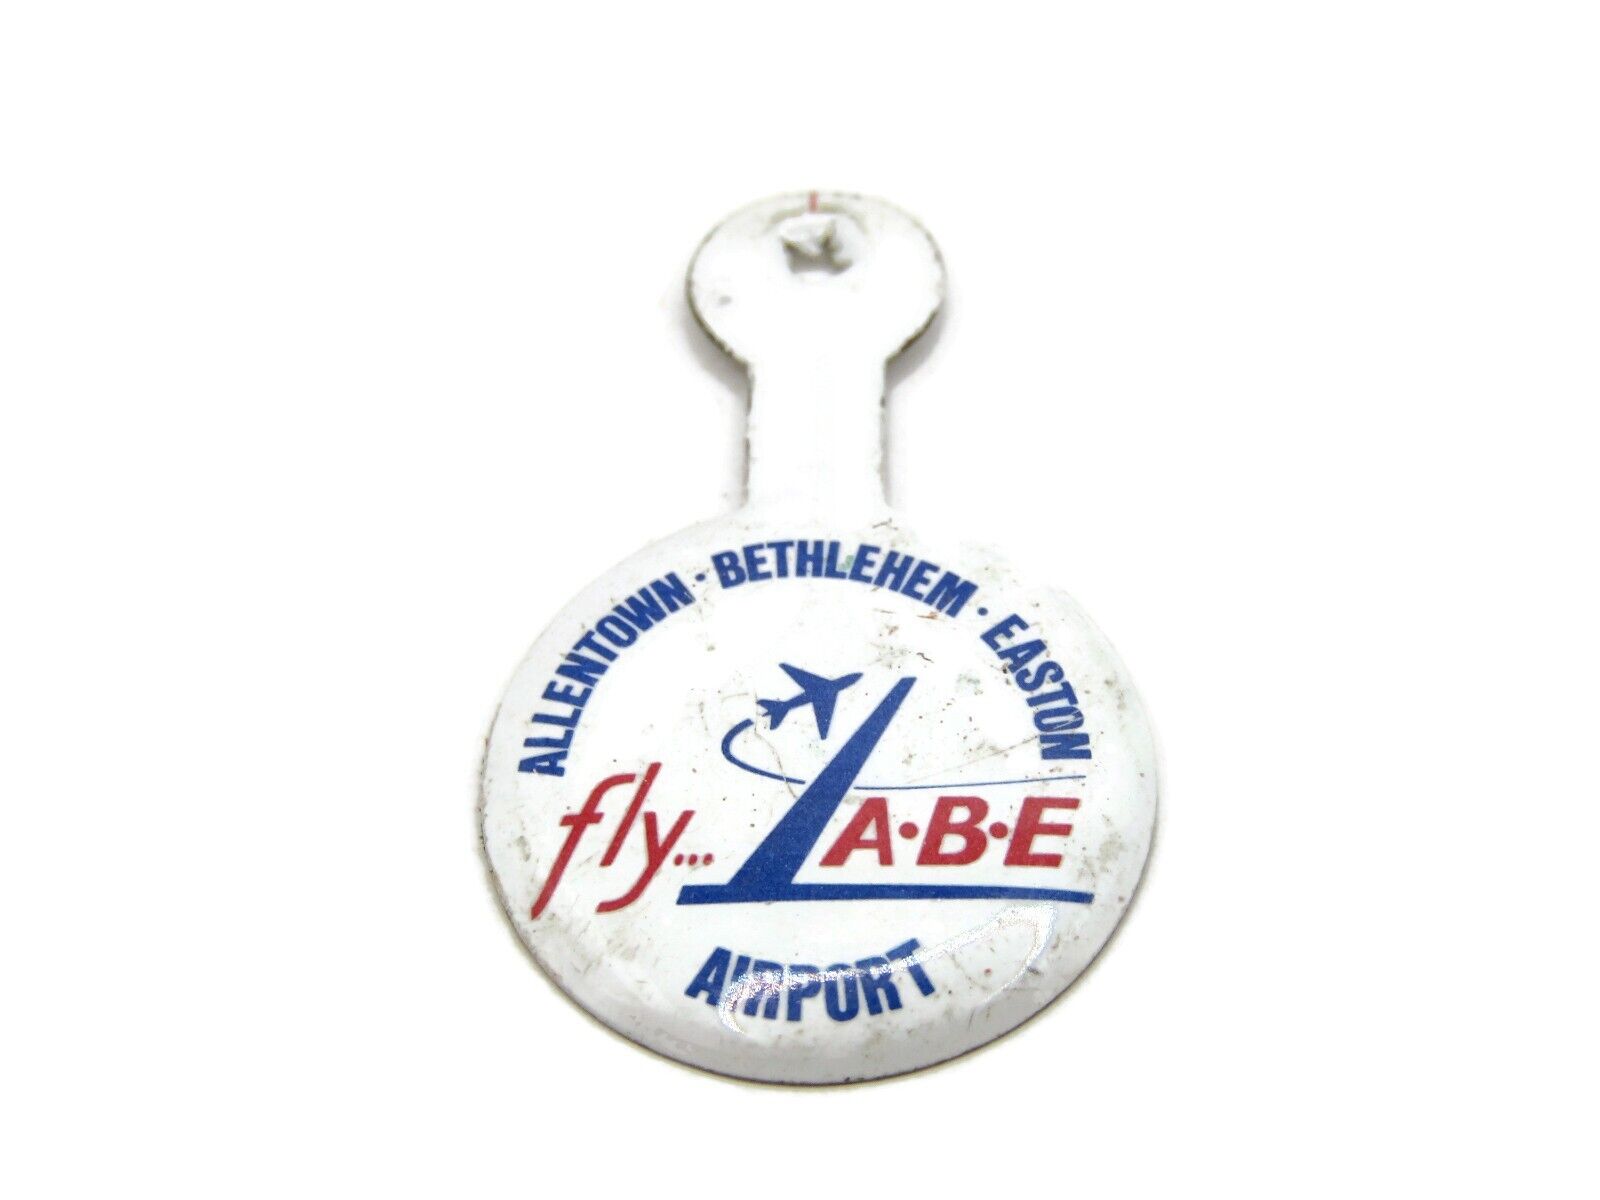 ABE Airport Allentown Bethlehem Easton Pin Button Metal Fold Design